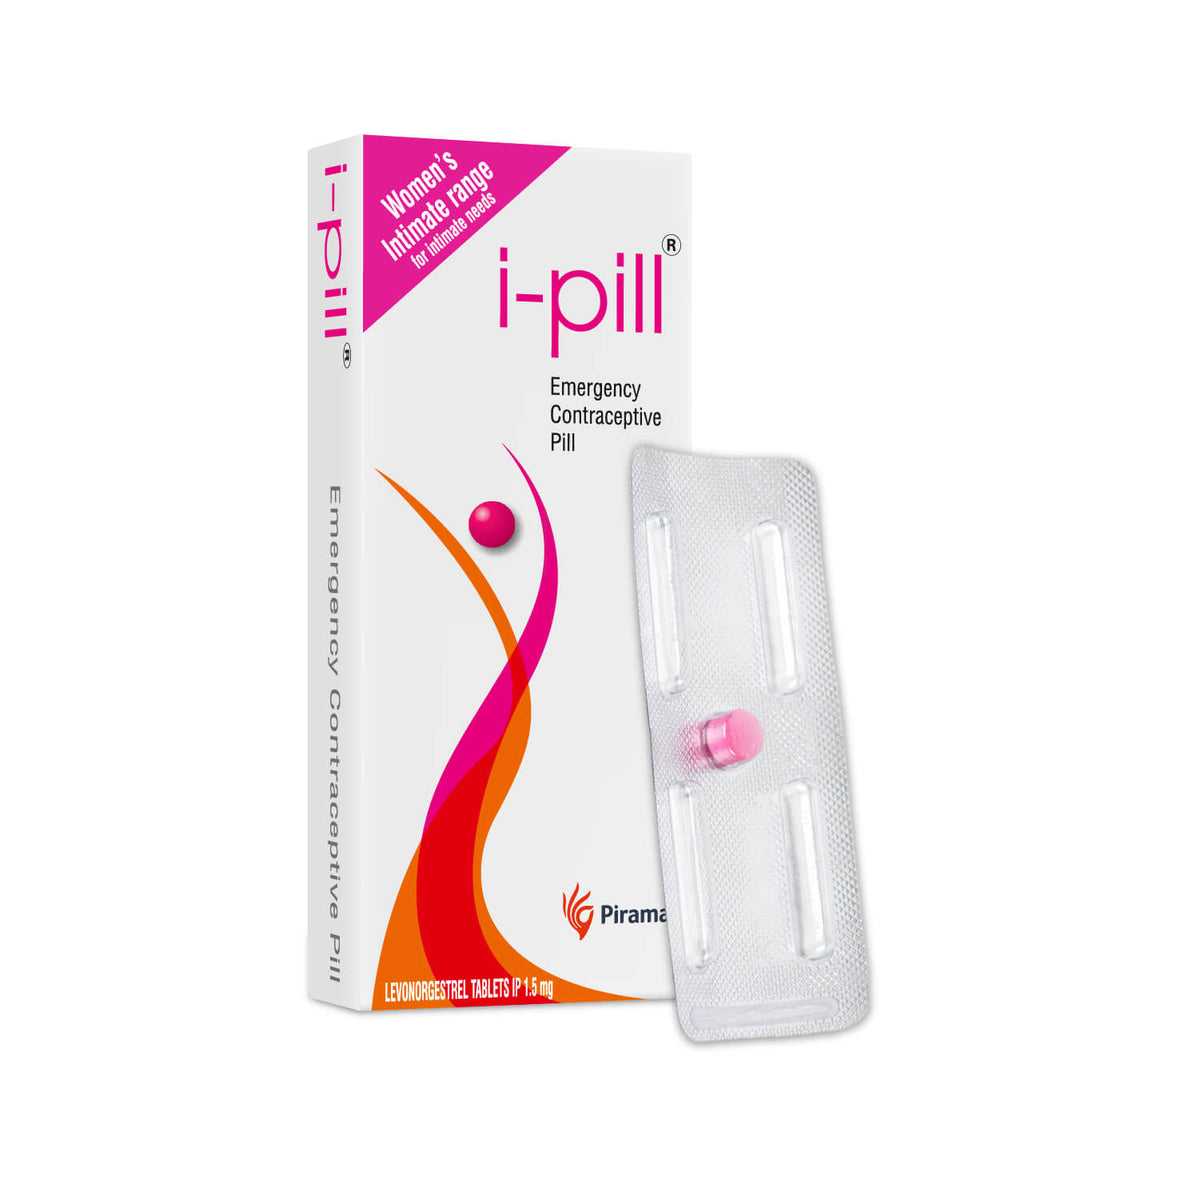 i-pill Emergency Contraceptive Pill | Preventing Unplanned Pregnancies